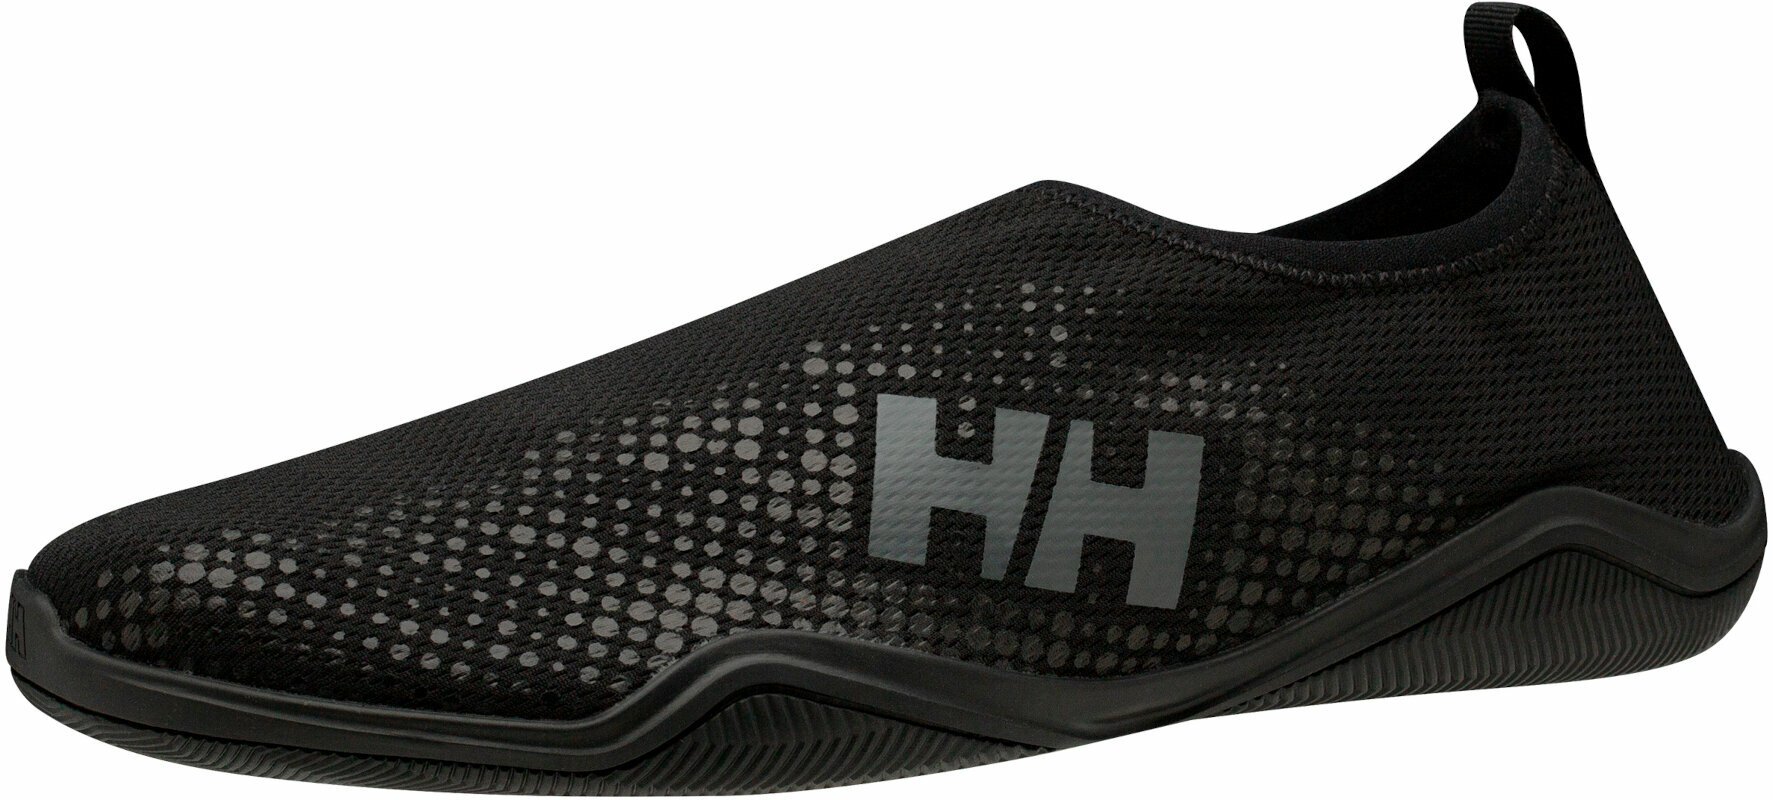 Mens Sailing Shoes Helly Hansen Men's Crest Watermoc Black/Charcoal 44